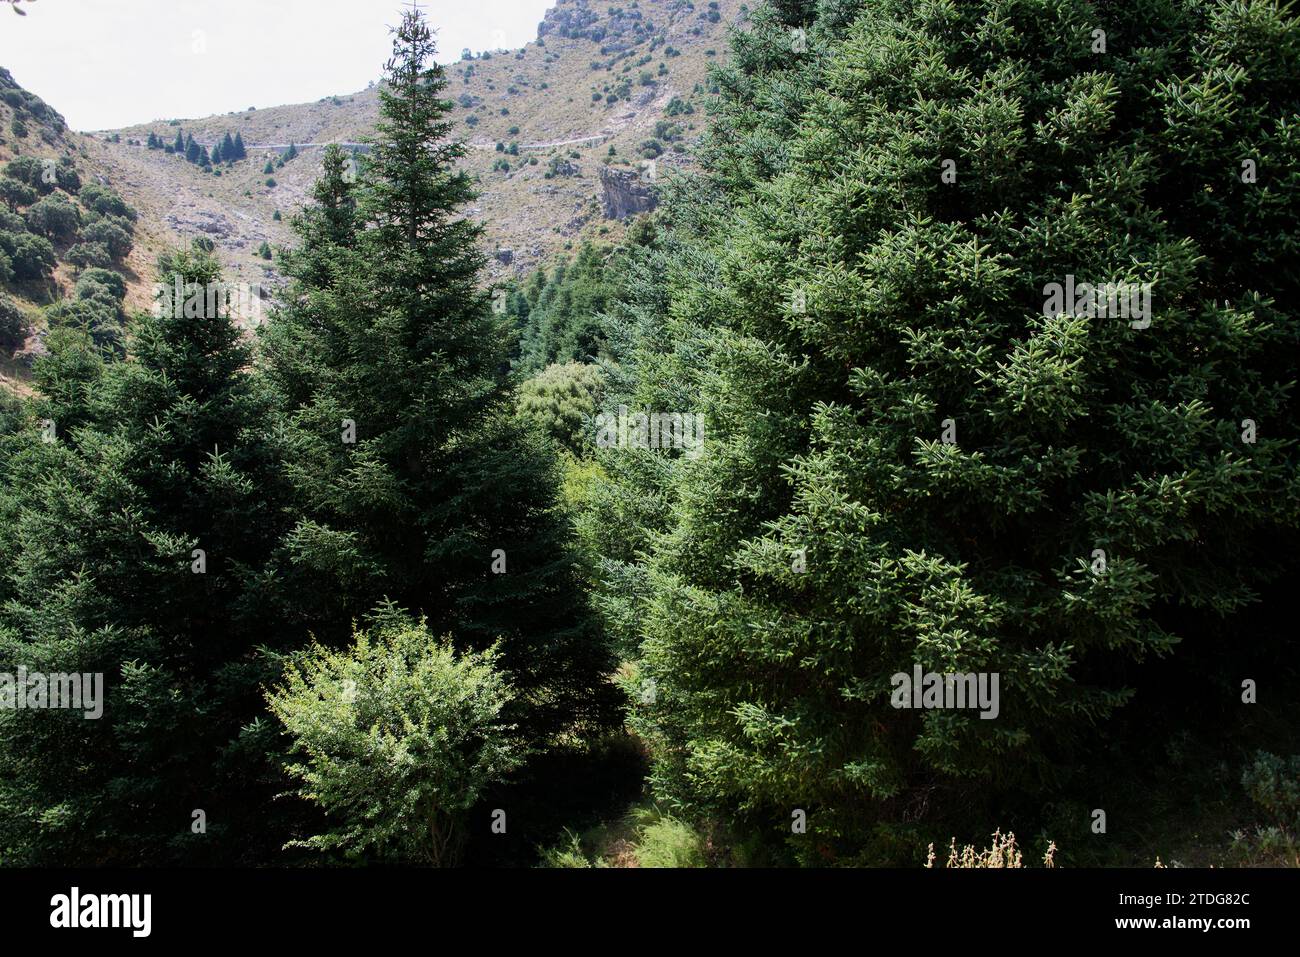 Spanish fir (Abies pinsapo) is a coniferous tree endemic to Cadiz and Malaga provinces. This photo was taken in Puerto de las Palomas, Cadiz province, Stock Photo